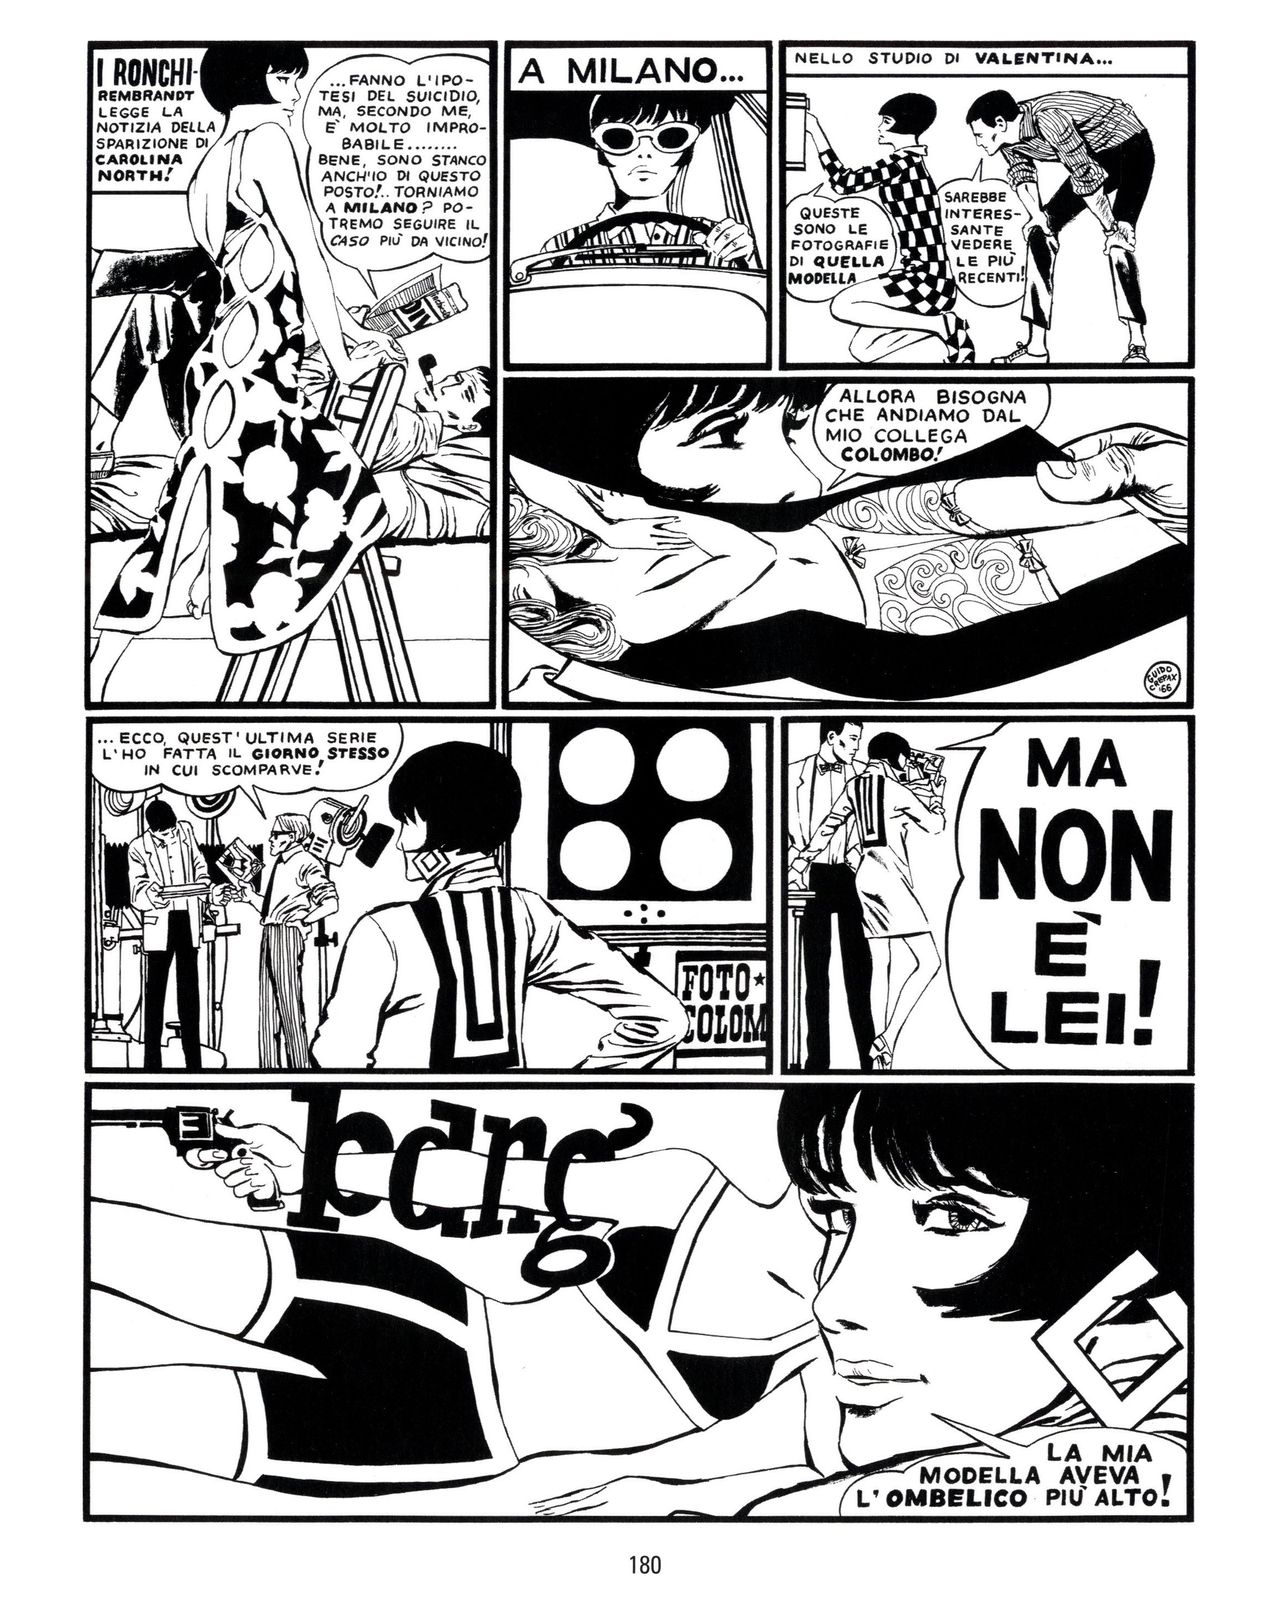 [Guido Crepax] Erotica Fumetti #25 : L'ascesa dei sotterranei : I cavalieri ciechi [Italian] 181